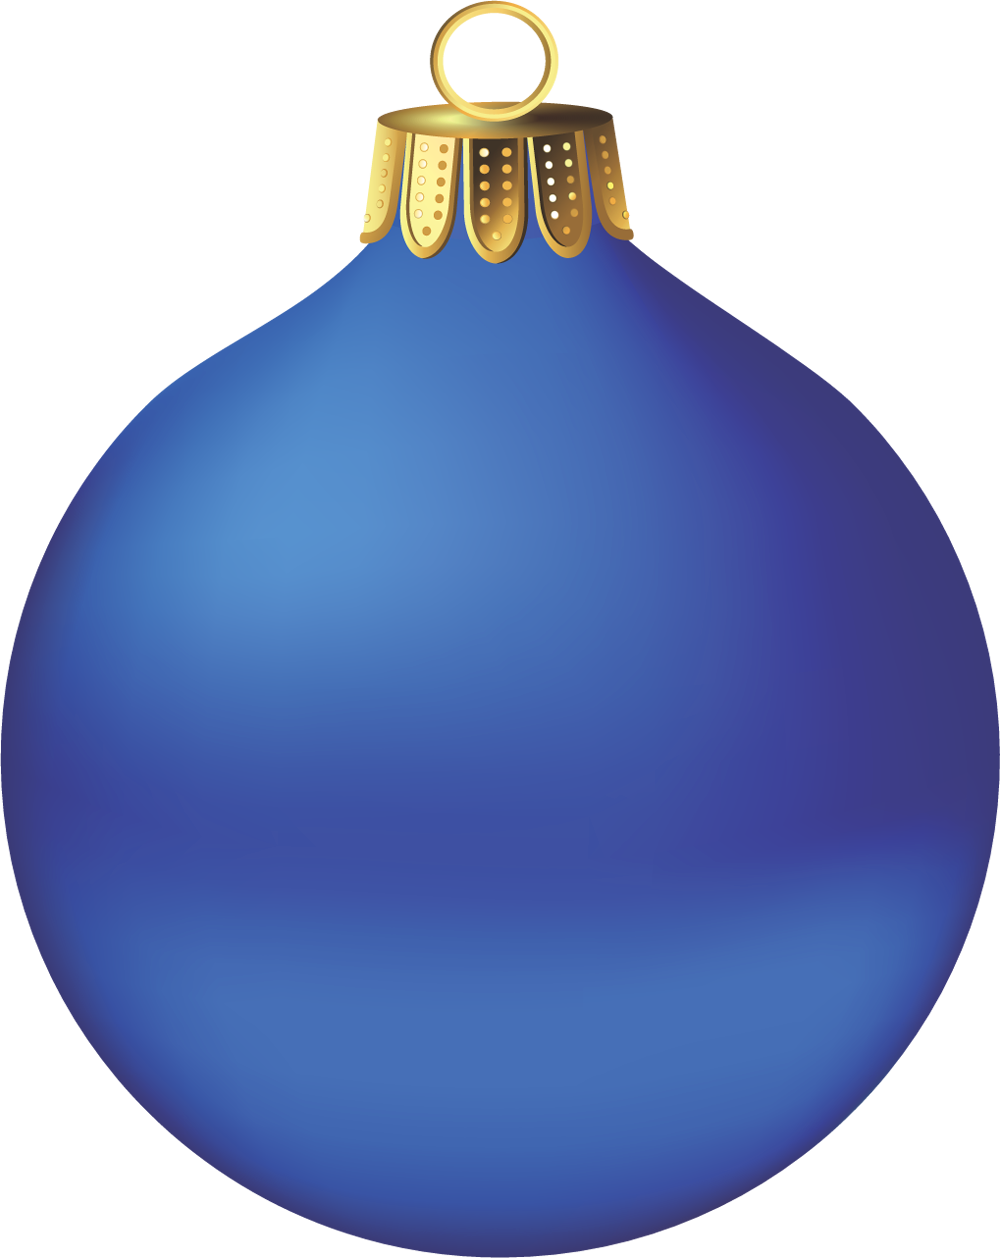 2014 Clipartpanda Com About T - Christmas Ornament Clipart